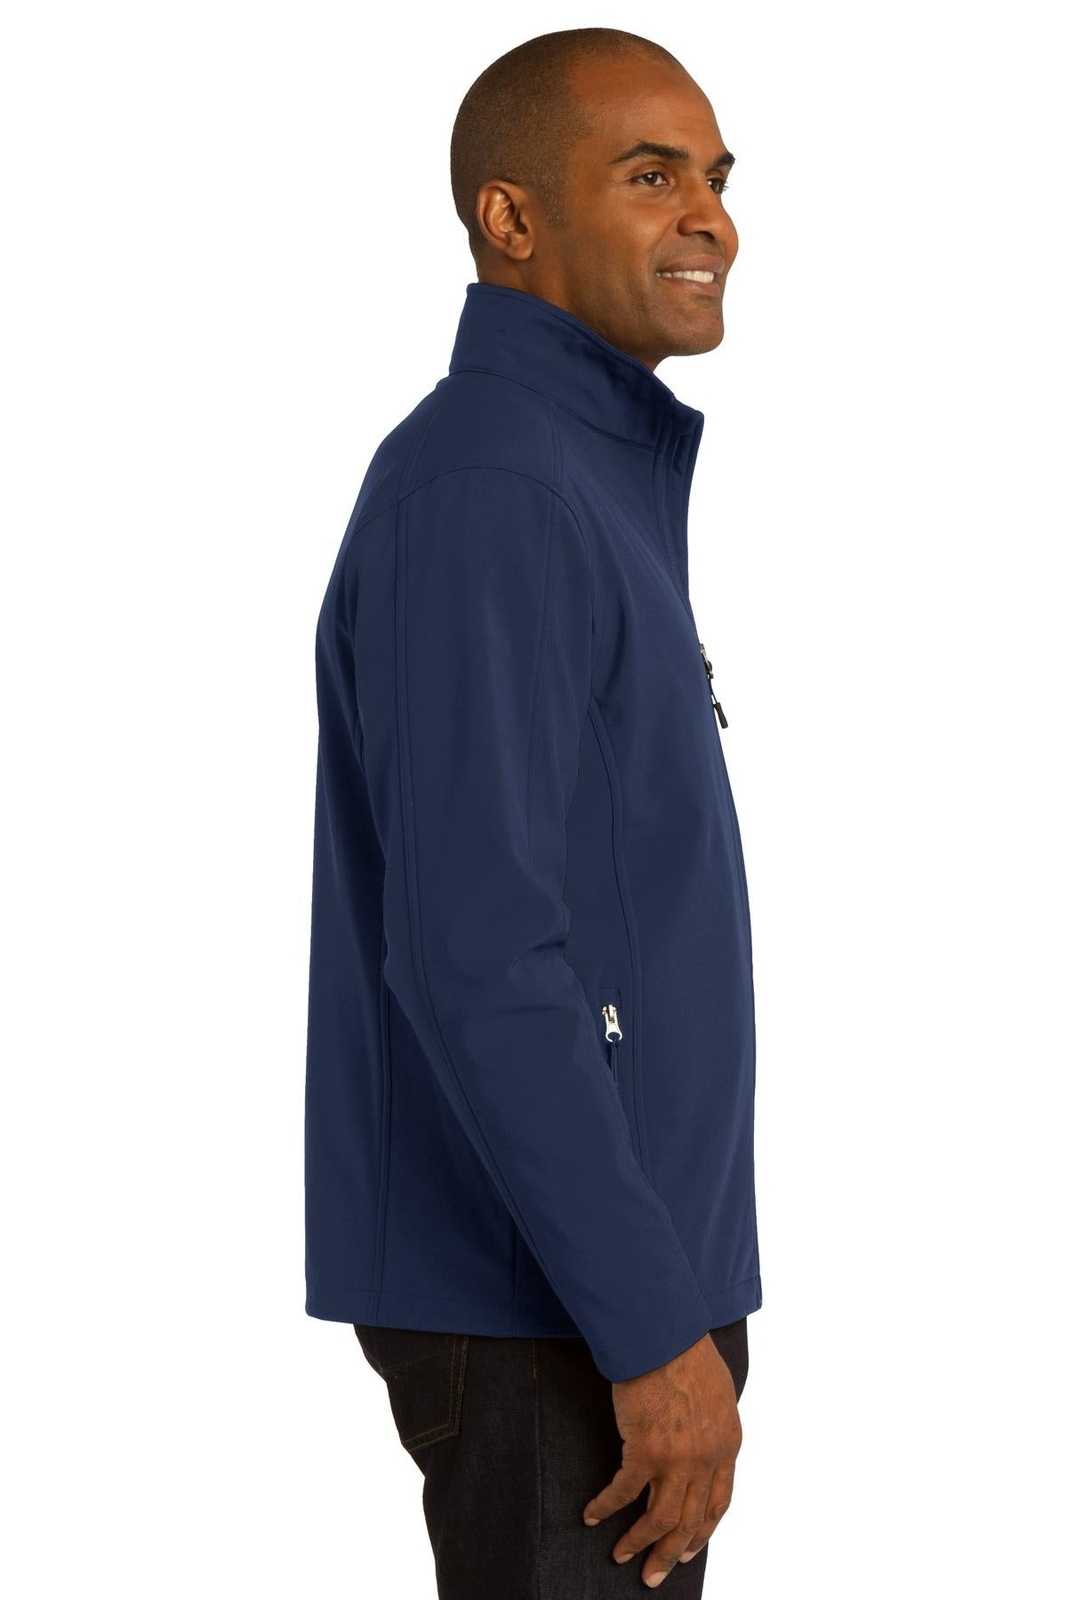 Port Authority J317 Core Soft Shell Jacket - Dress Blue Navy - HIT a Double - 3